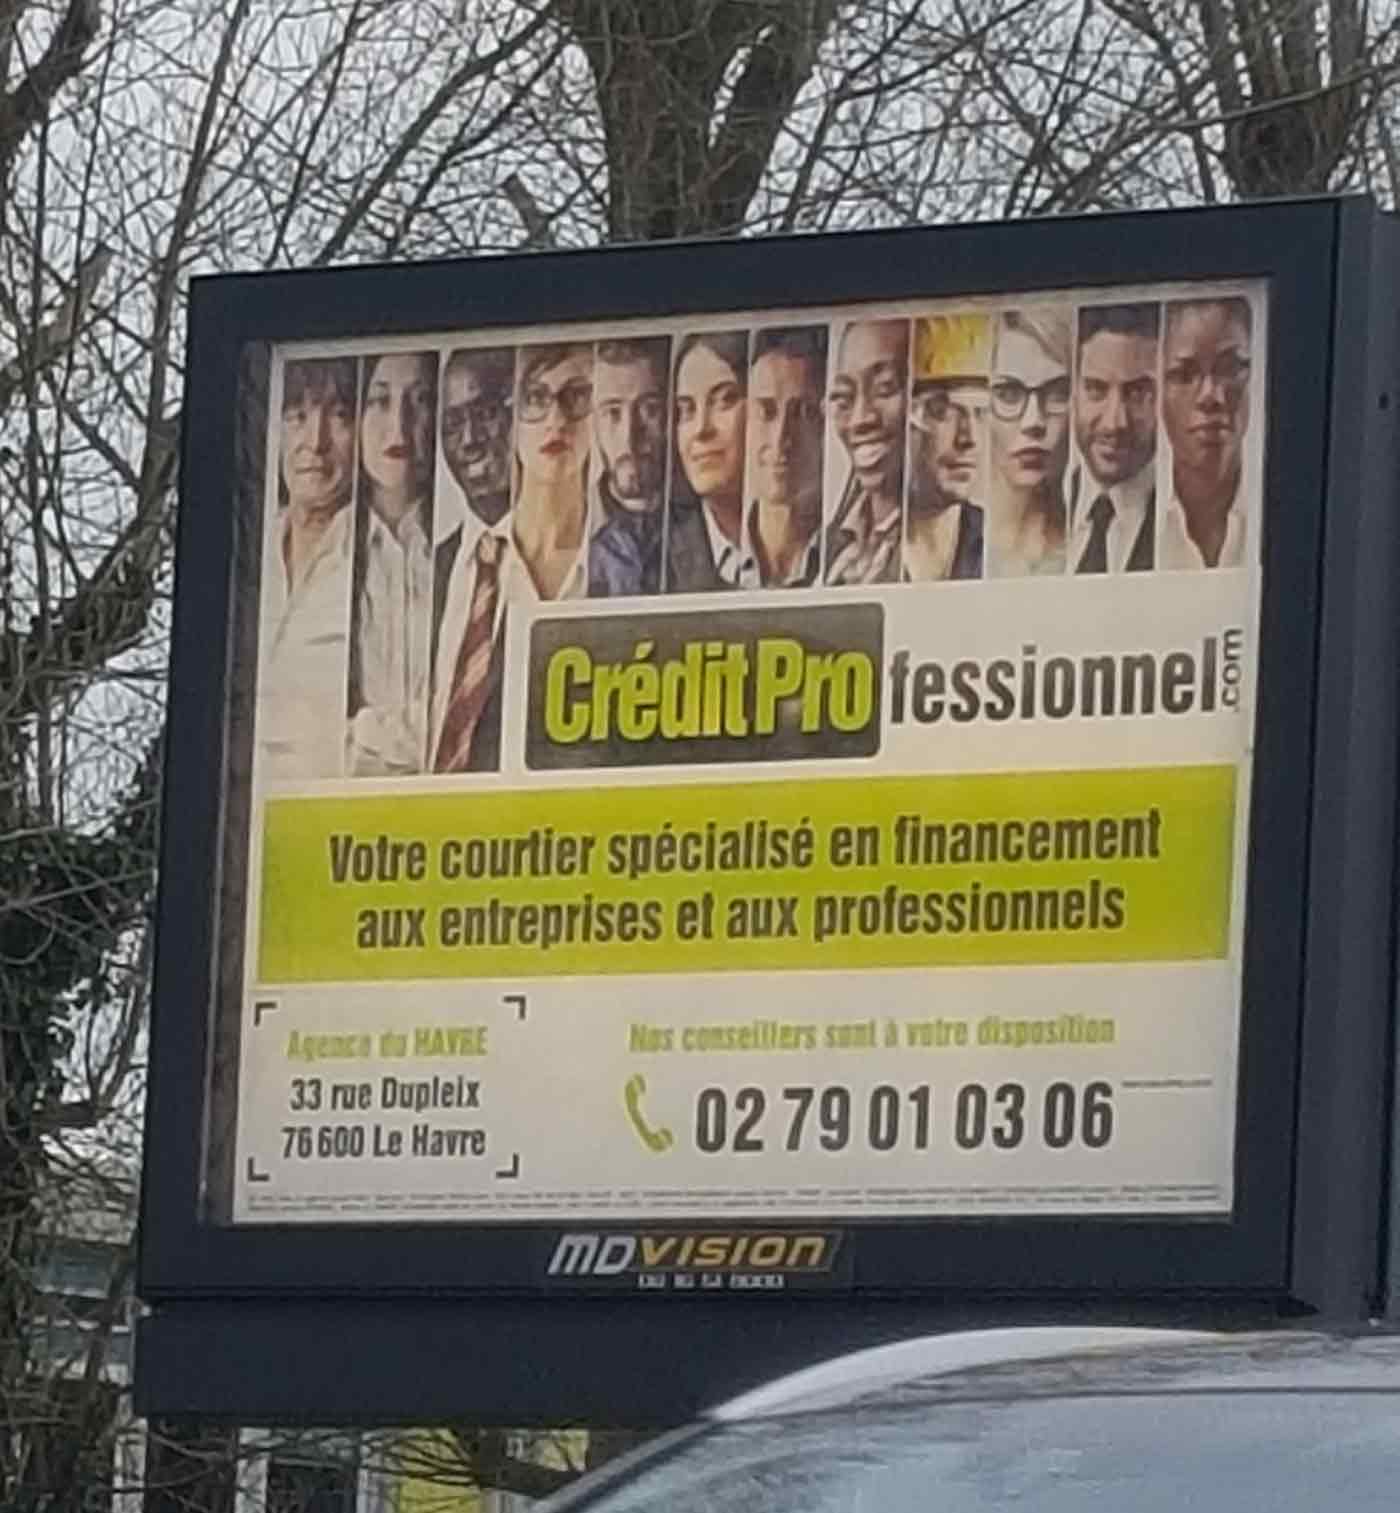 CreditProfessionnel Havre